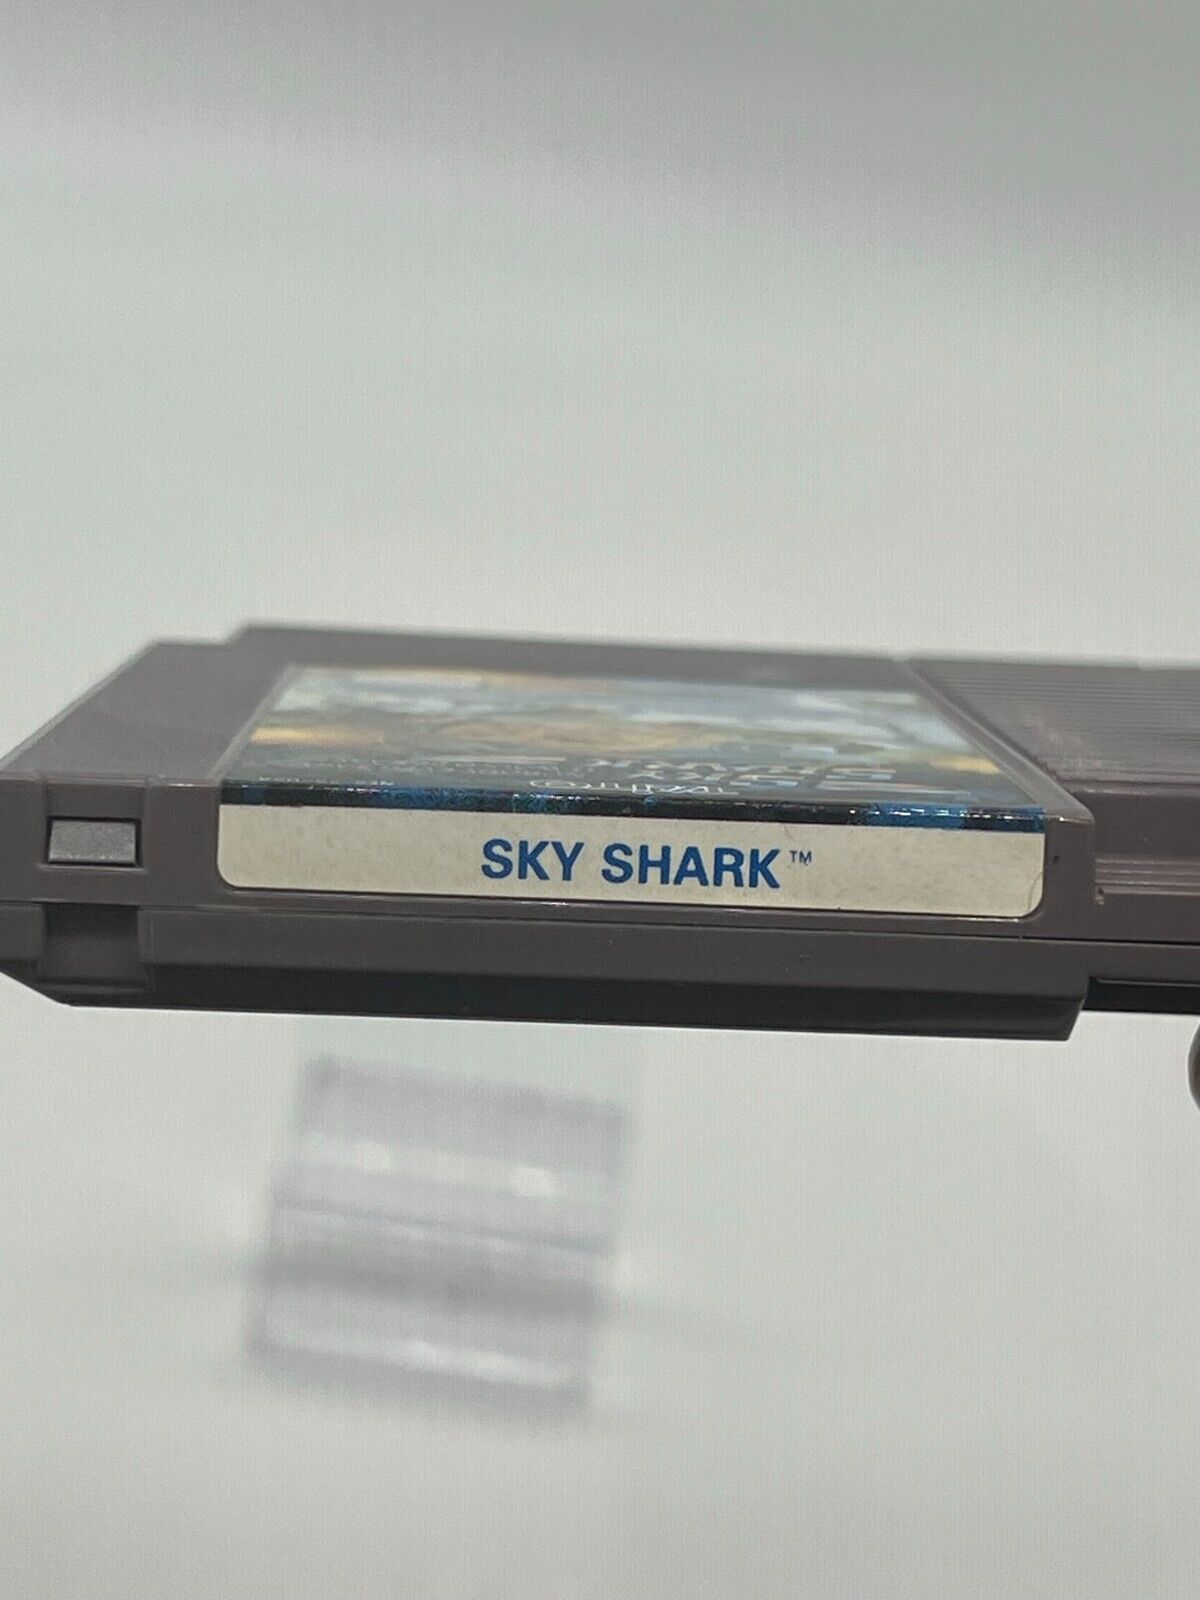 NES Sky Shark (Nintendo Entertainment System, 1989)